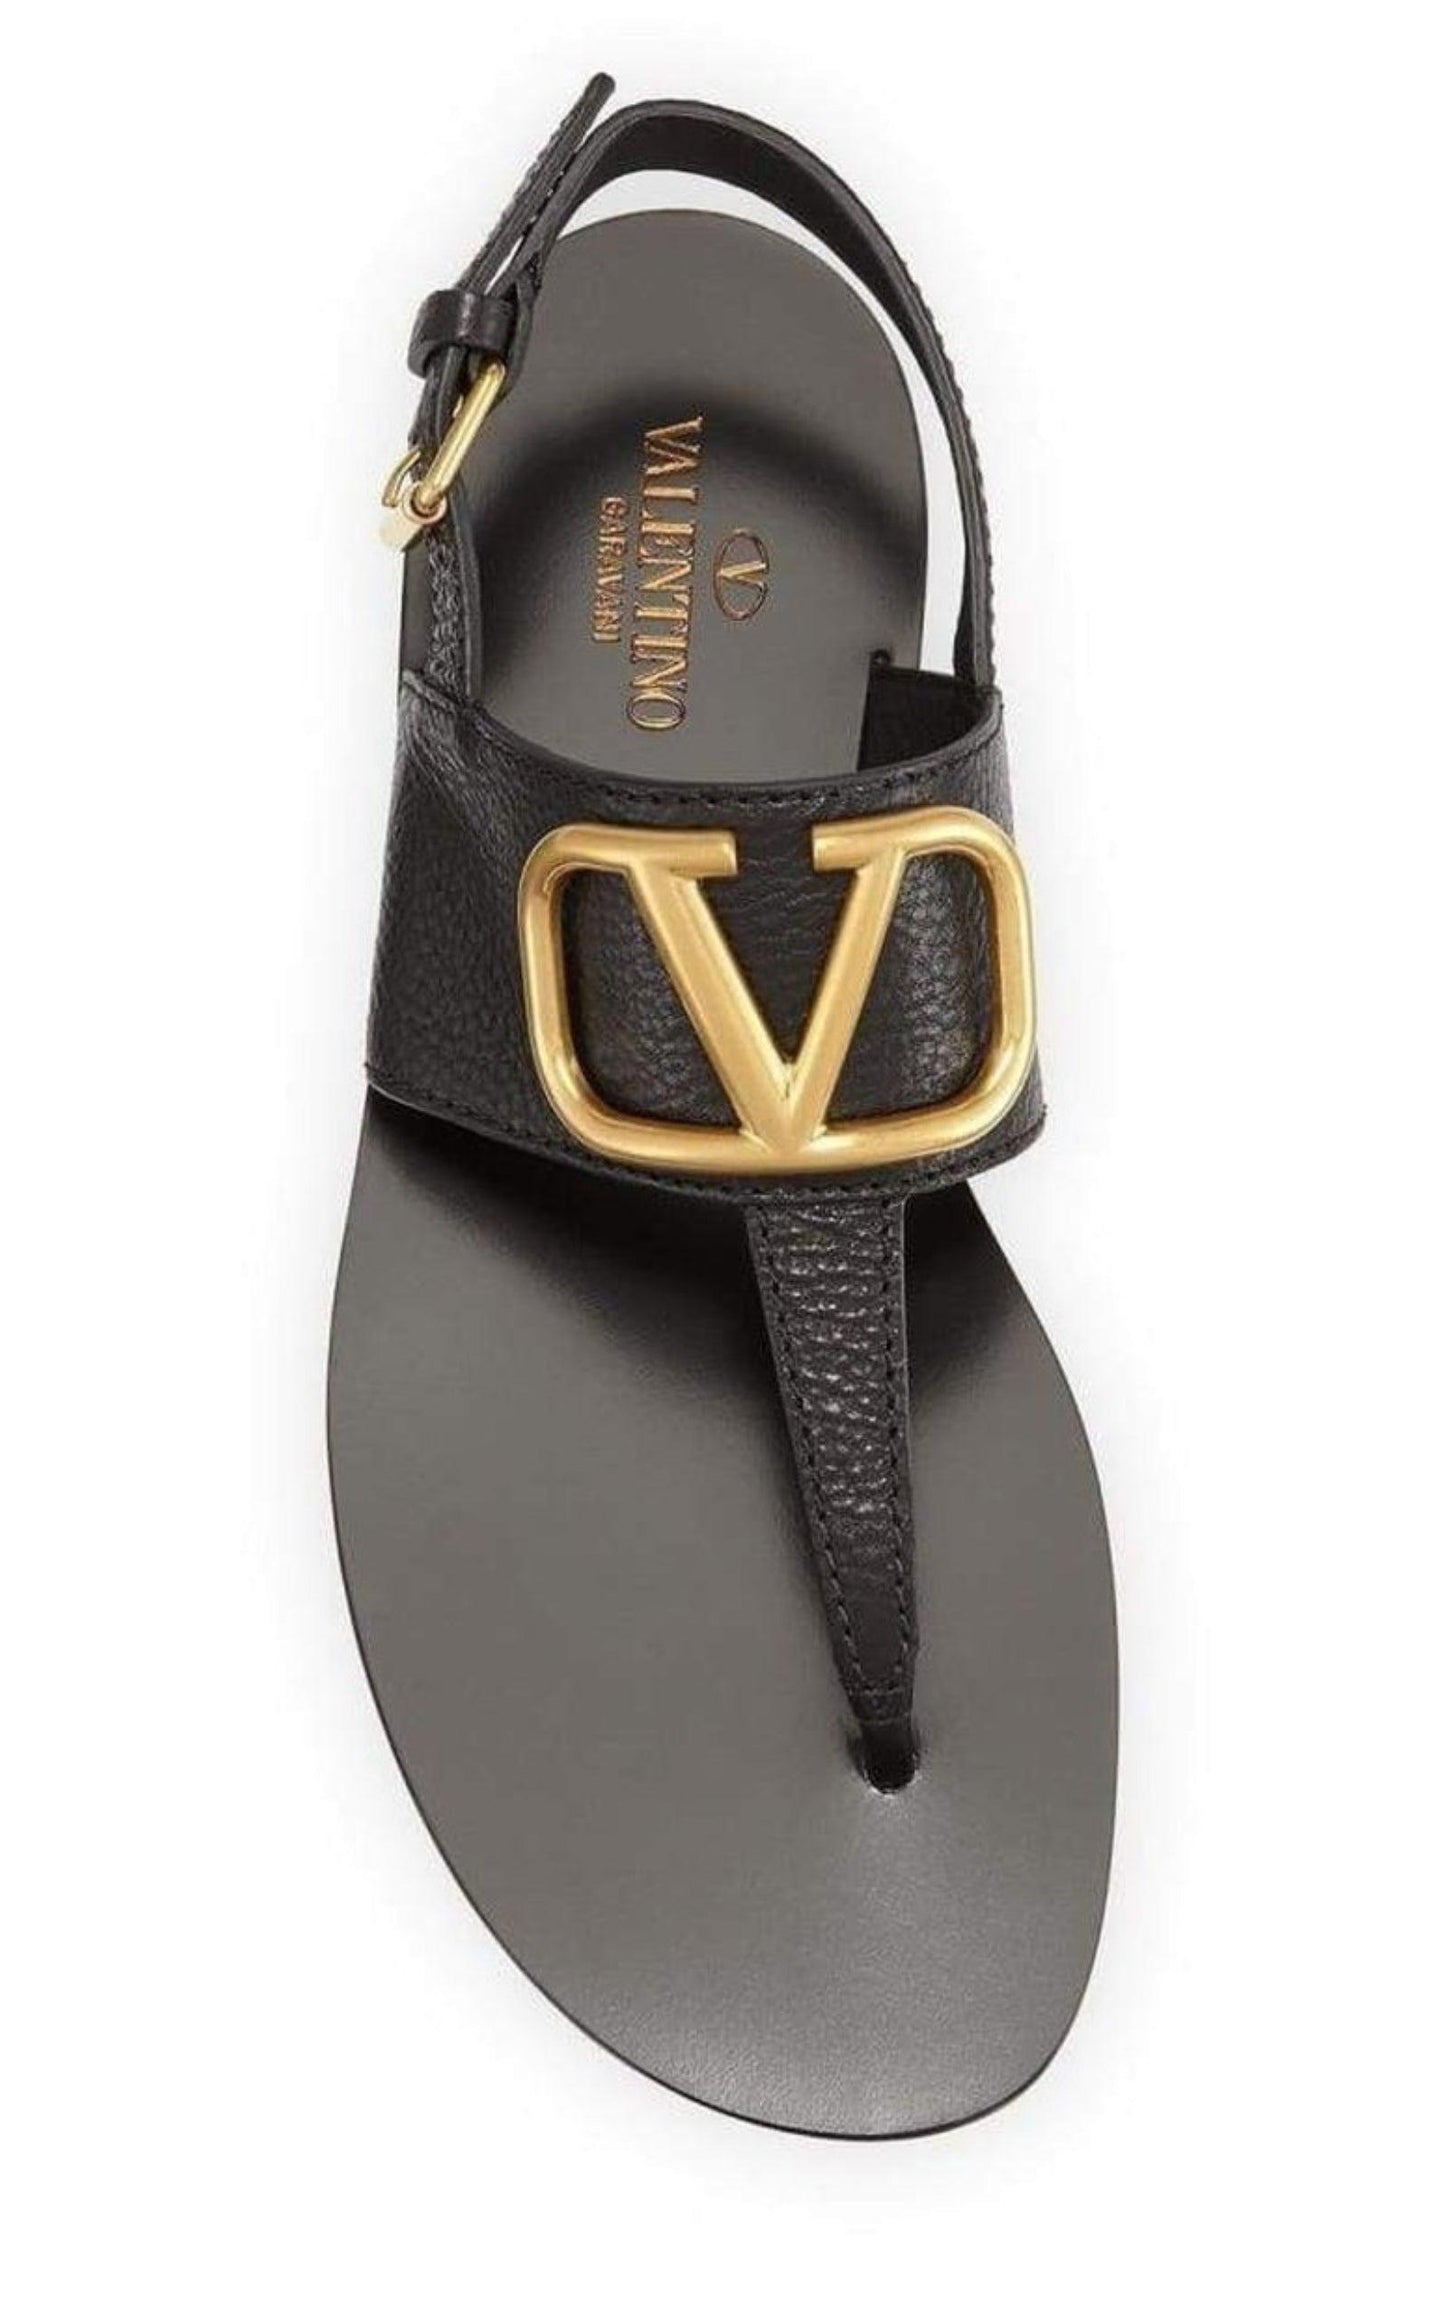  ValentinoV-LOGO Leather Thong Sandal - Runway Catalog